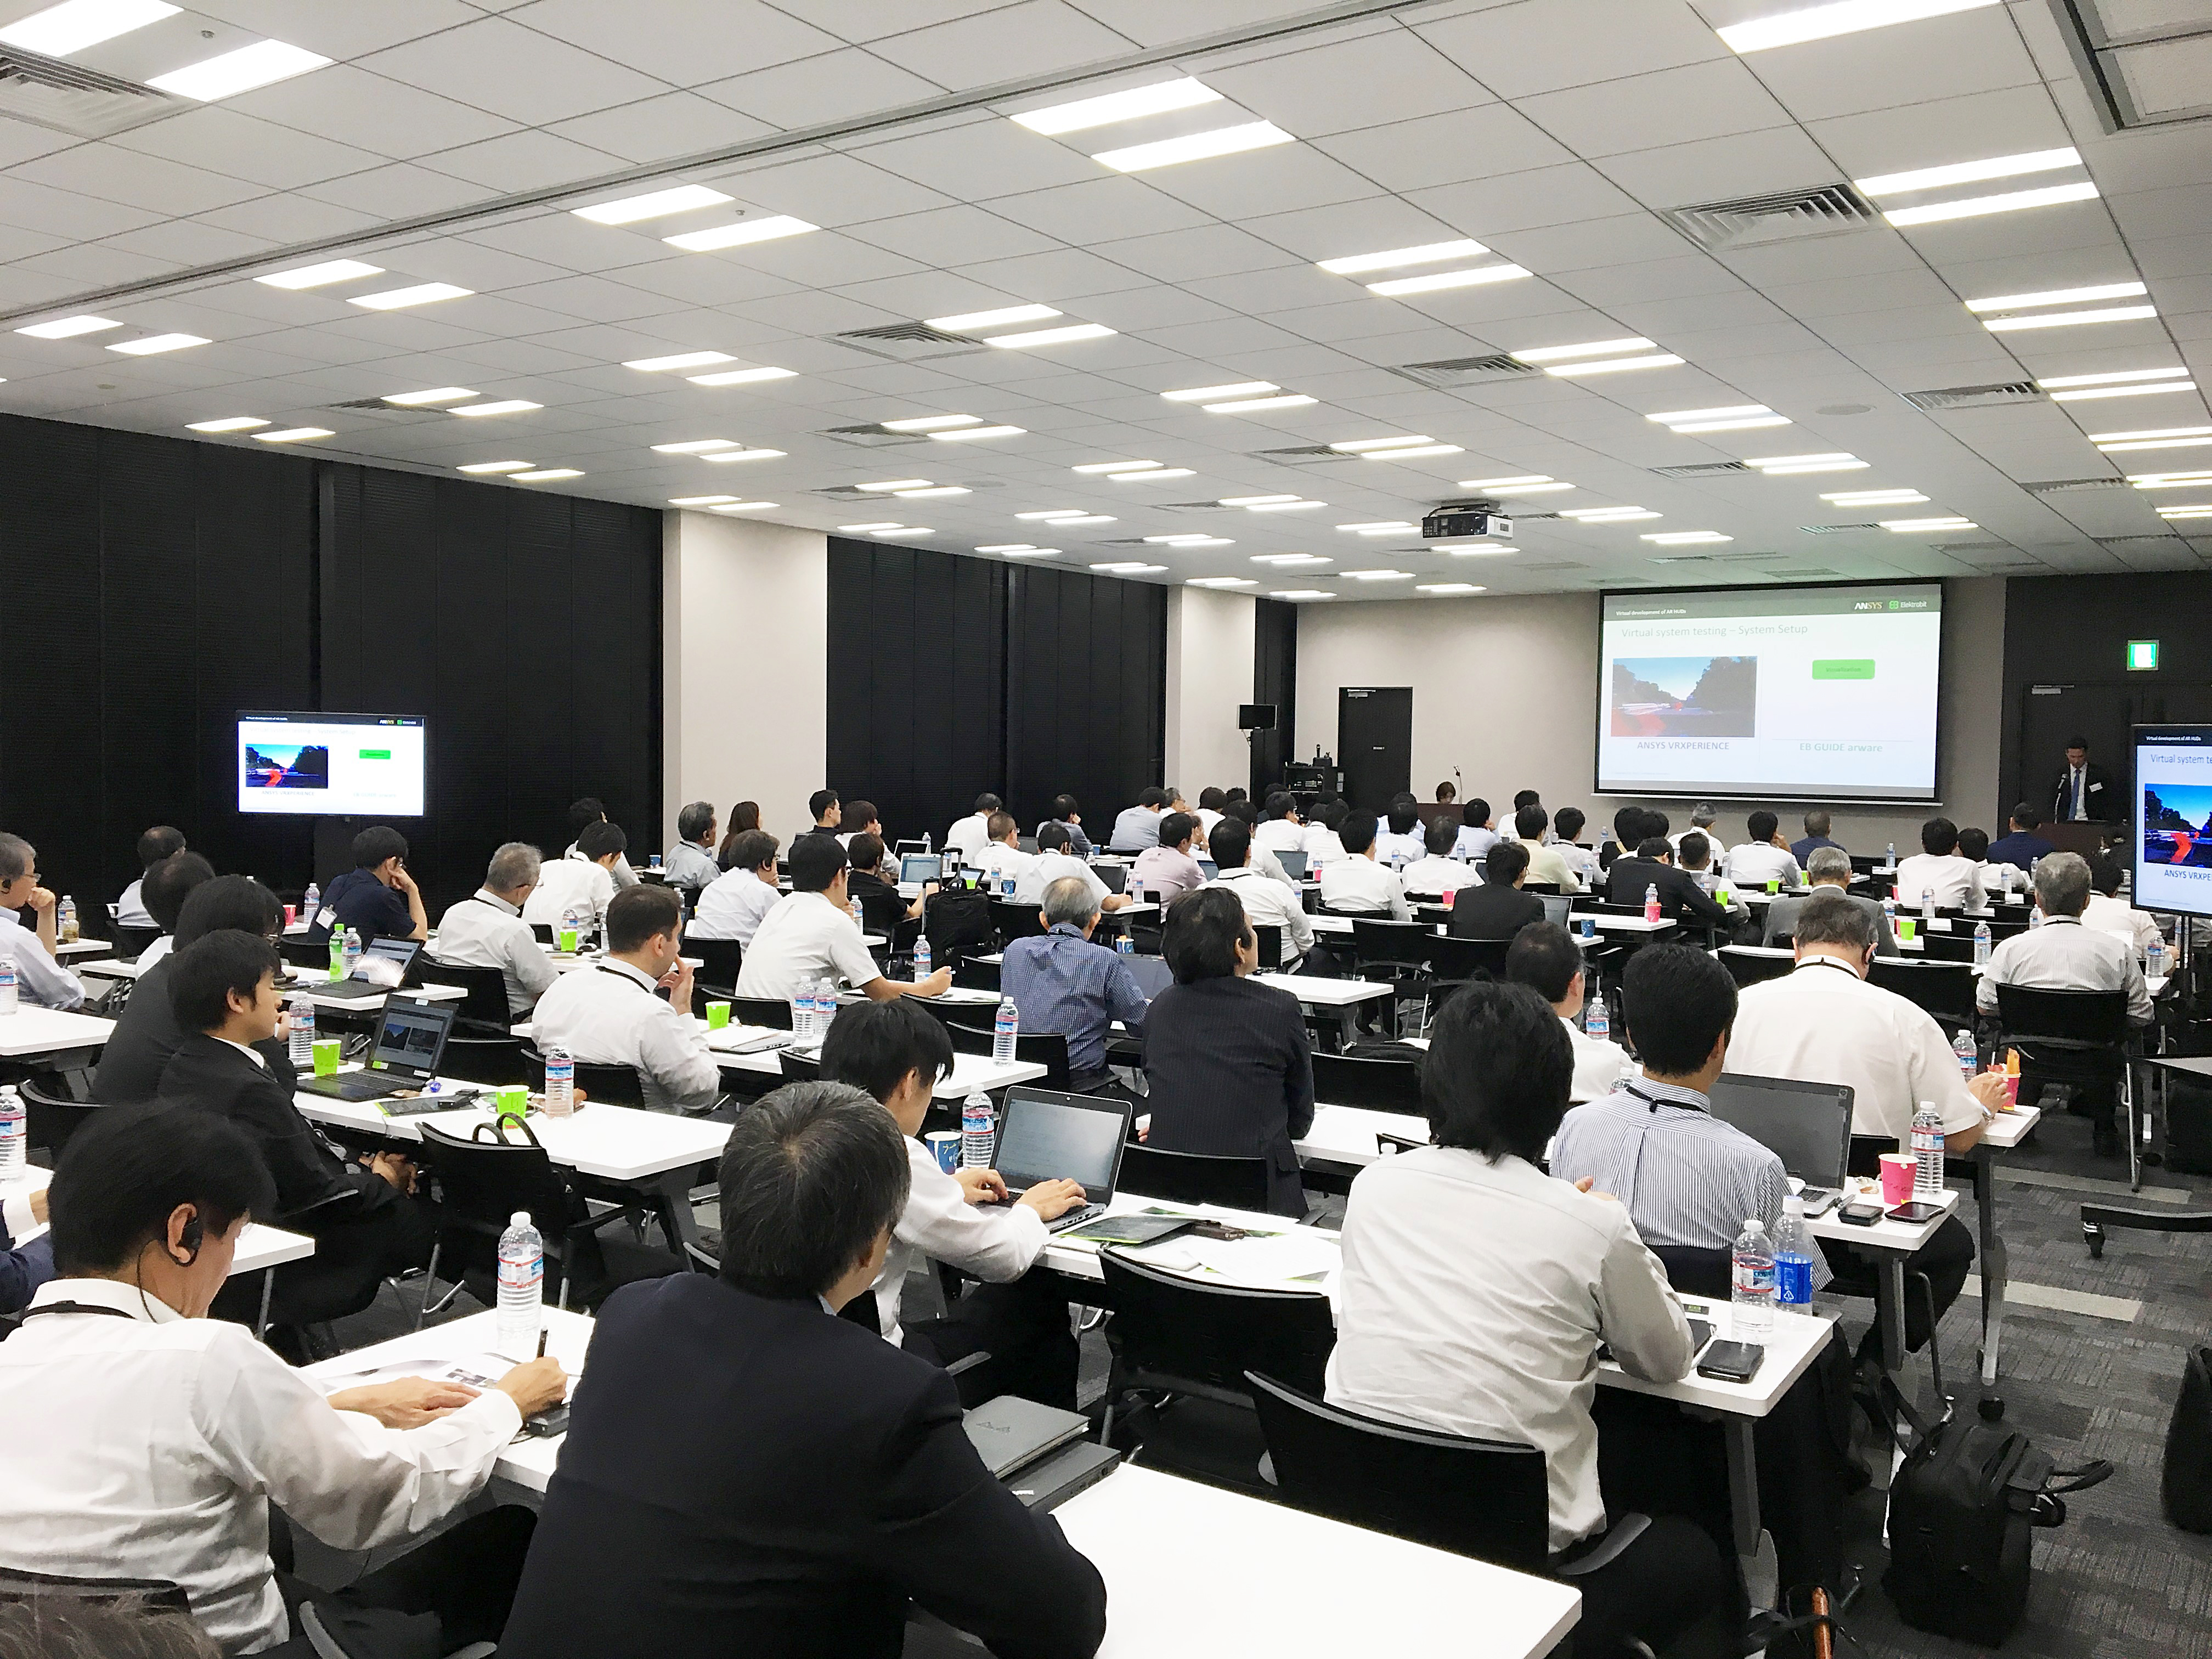 Elektrobit Japan Presents The Latest Hmi Demo At The Annual Eb Tech Day Japan In October Elektrobit